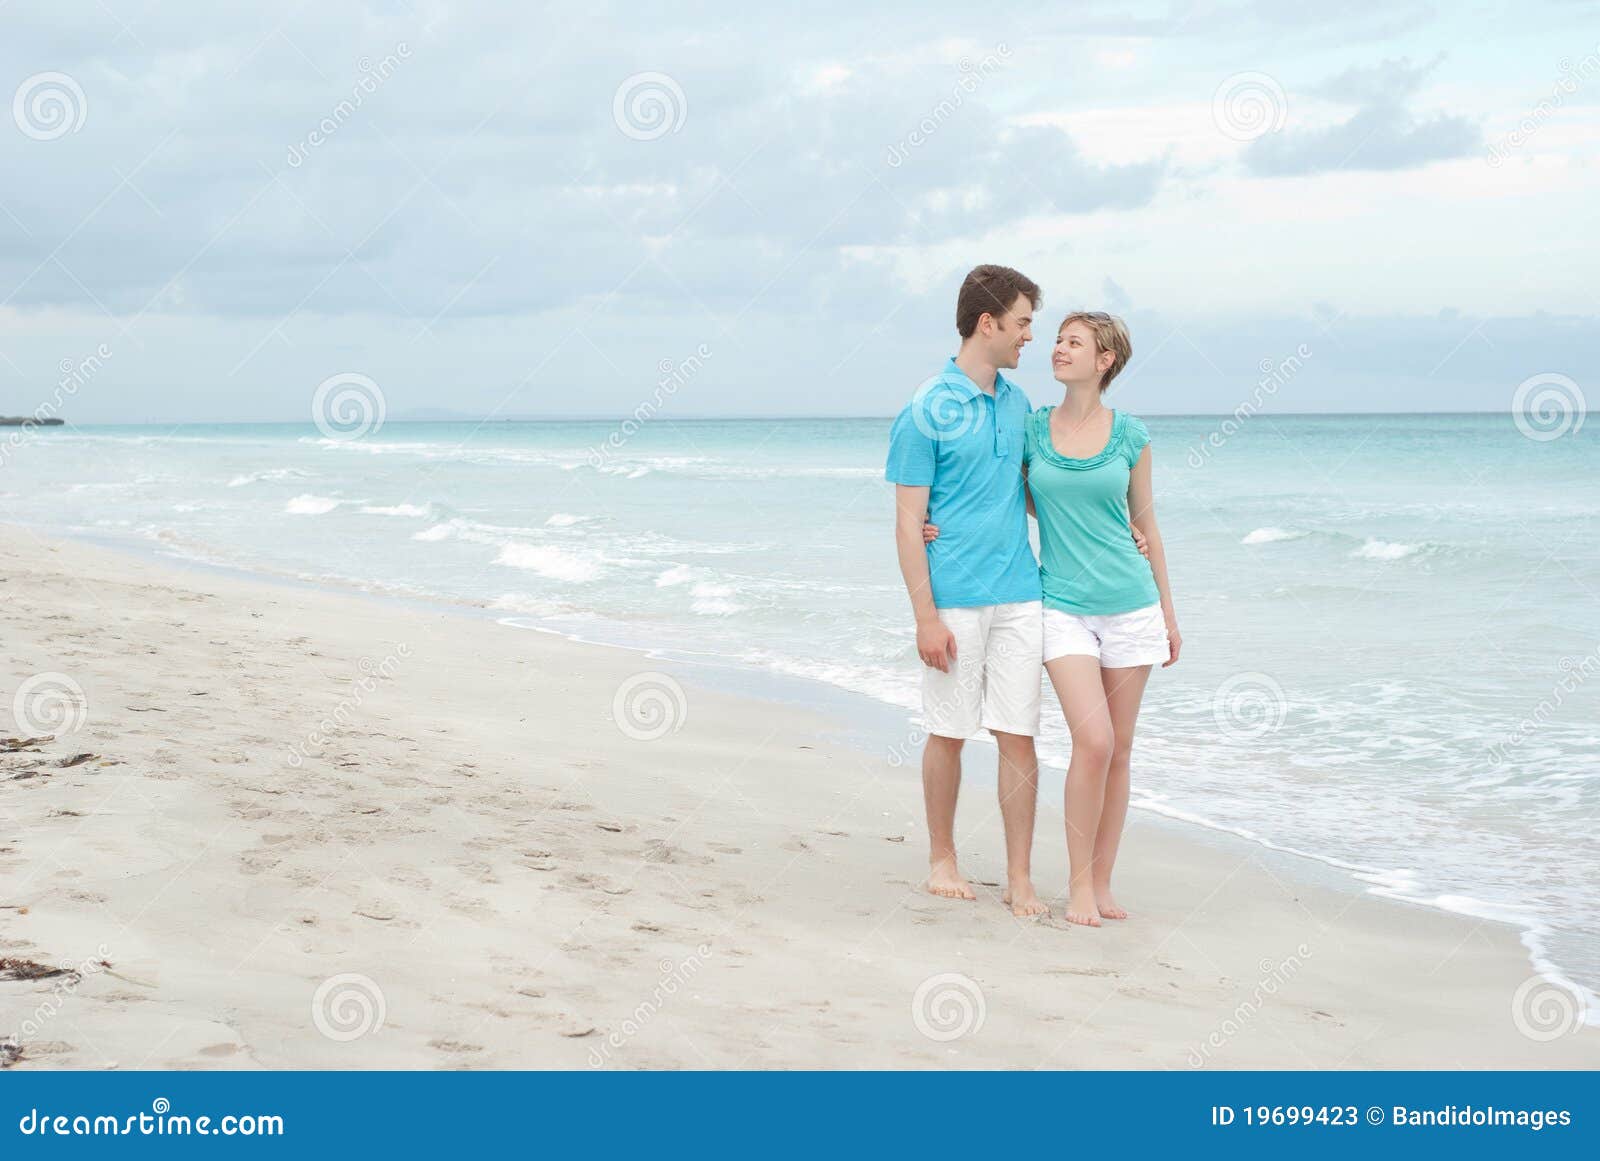 http://thumbs.dreamstime.com/z/happy-couple-beach-19699423.jpg